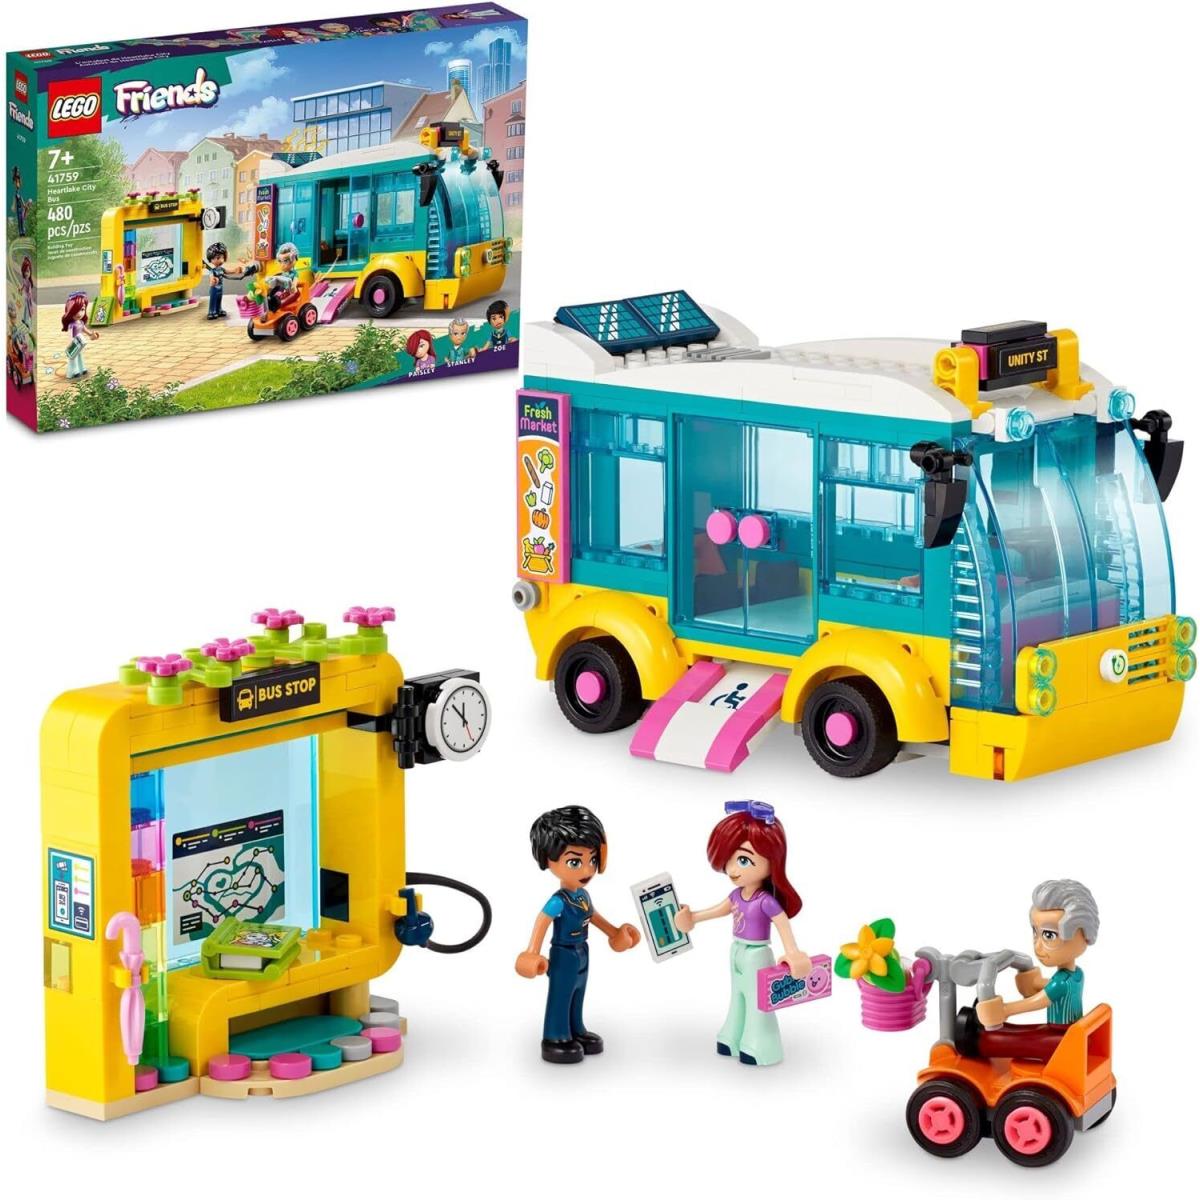 Lego Friends Heartlake City Bus 41759 Building Toy Set A Fun Birthday Gift